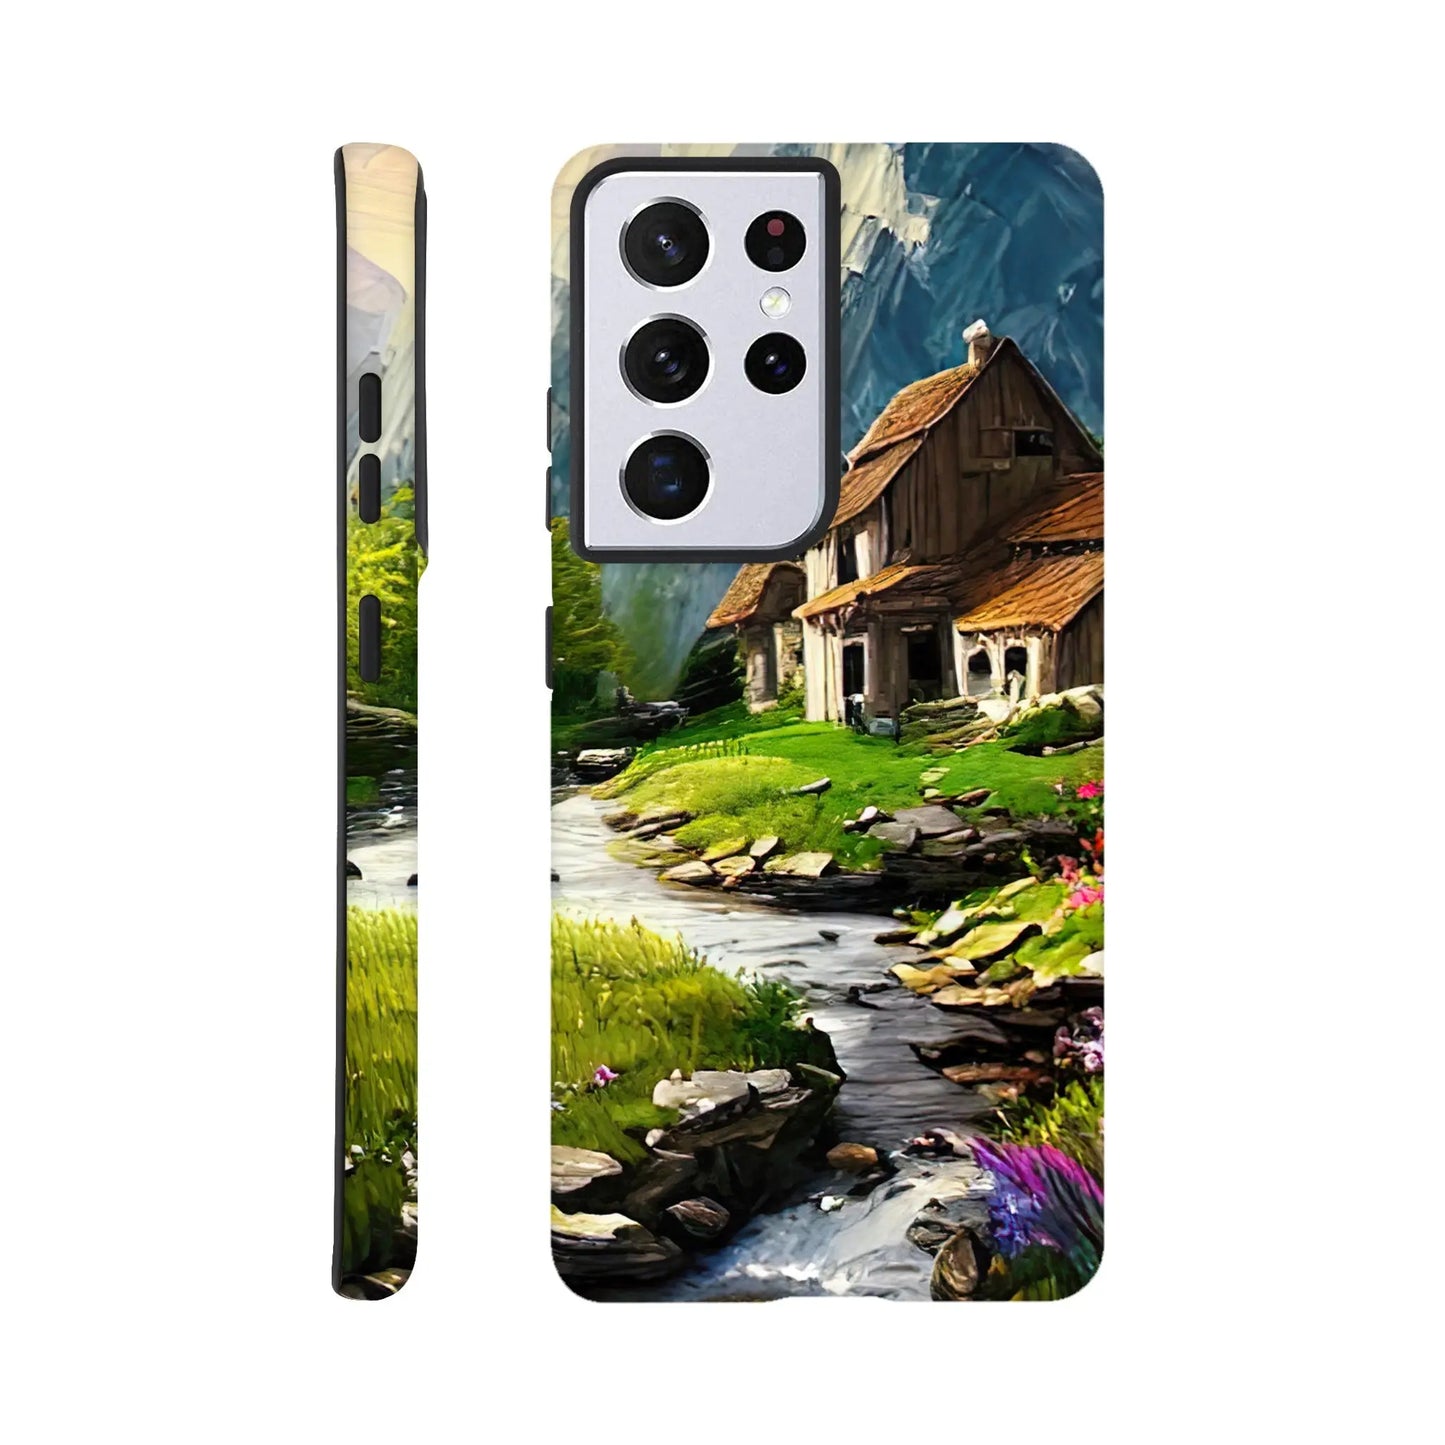 Smartphone-Hülle "Hart" - Berglandschaft - Malerischer Stil, KI-Kunst RolConArt, Landschaften, Galaxy-S21-Ultra